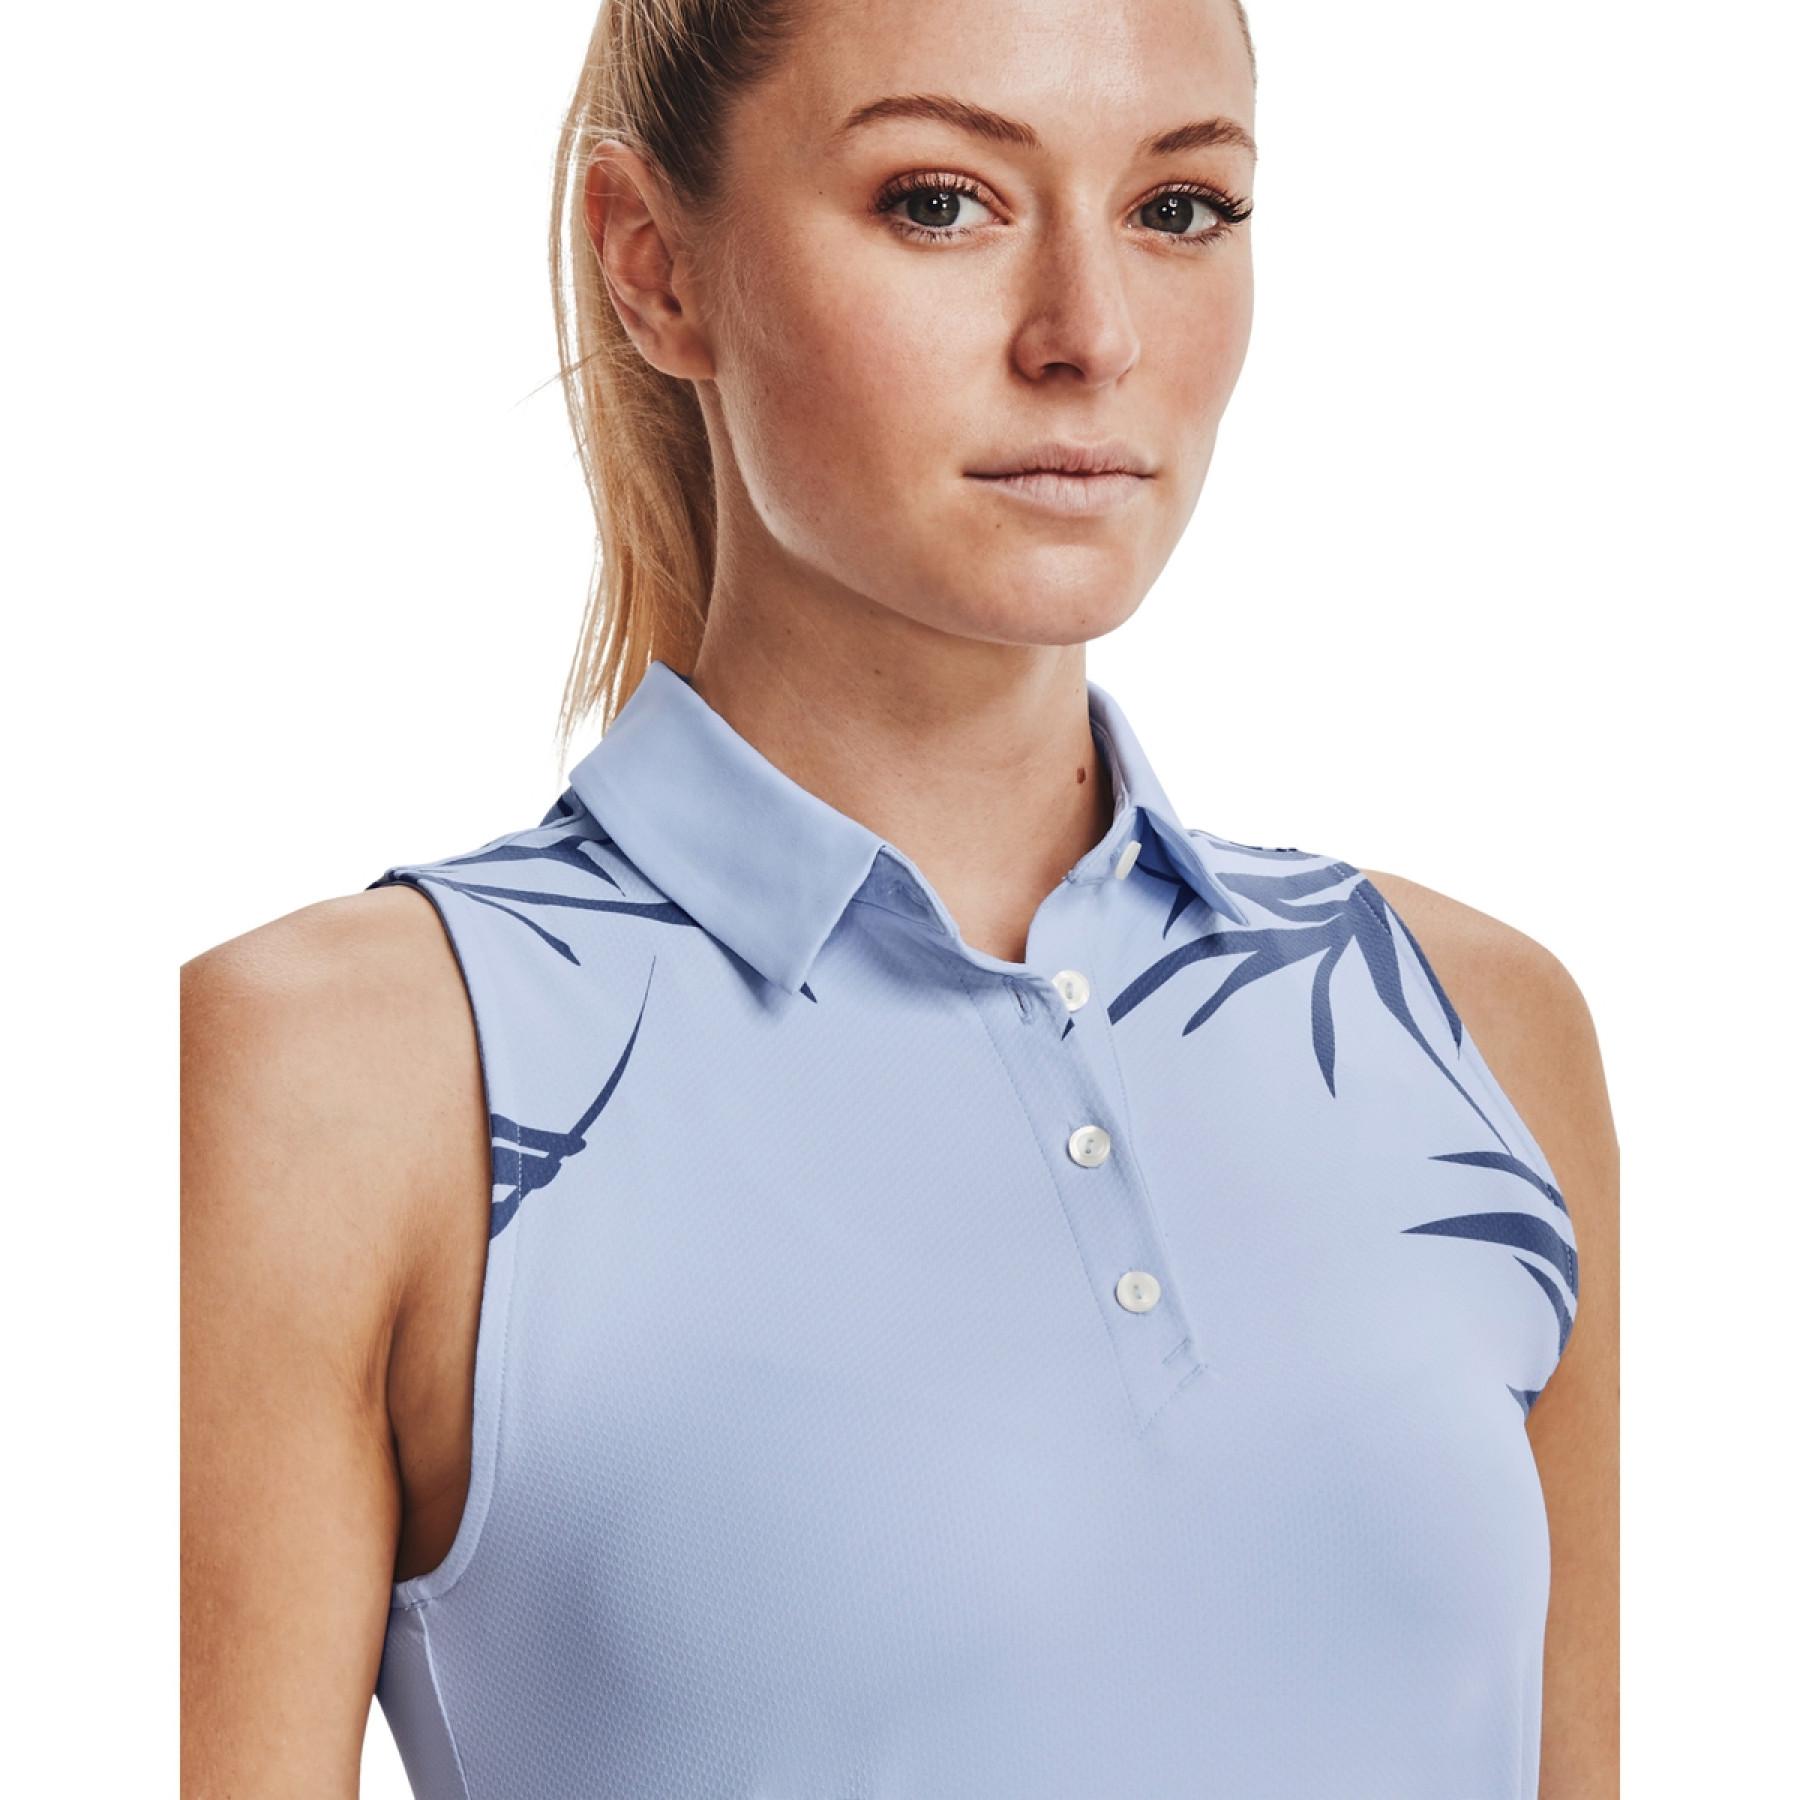 Women's Under Armour sleeveless polo shirt iso-chill